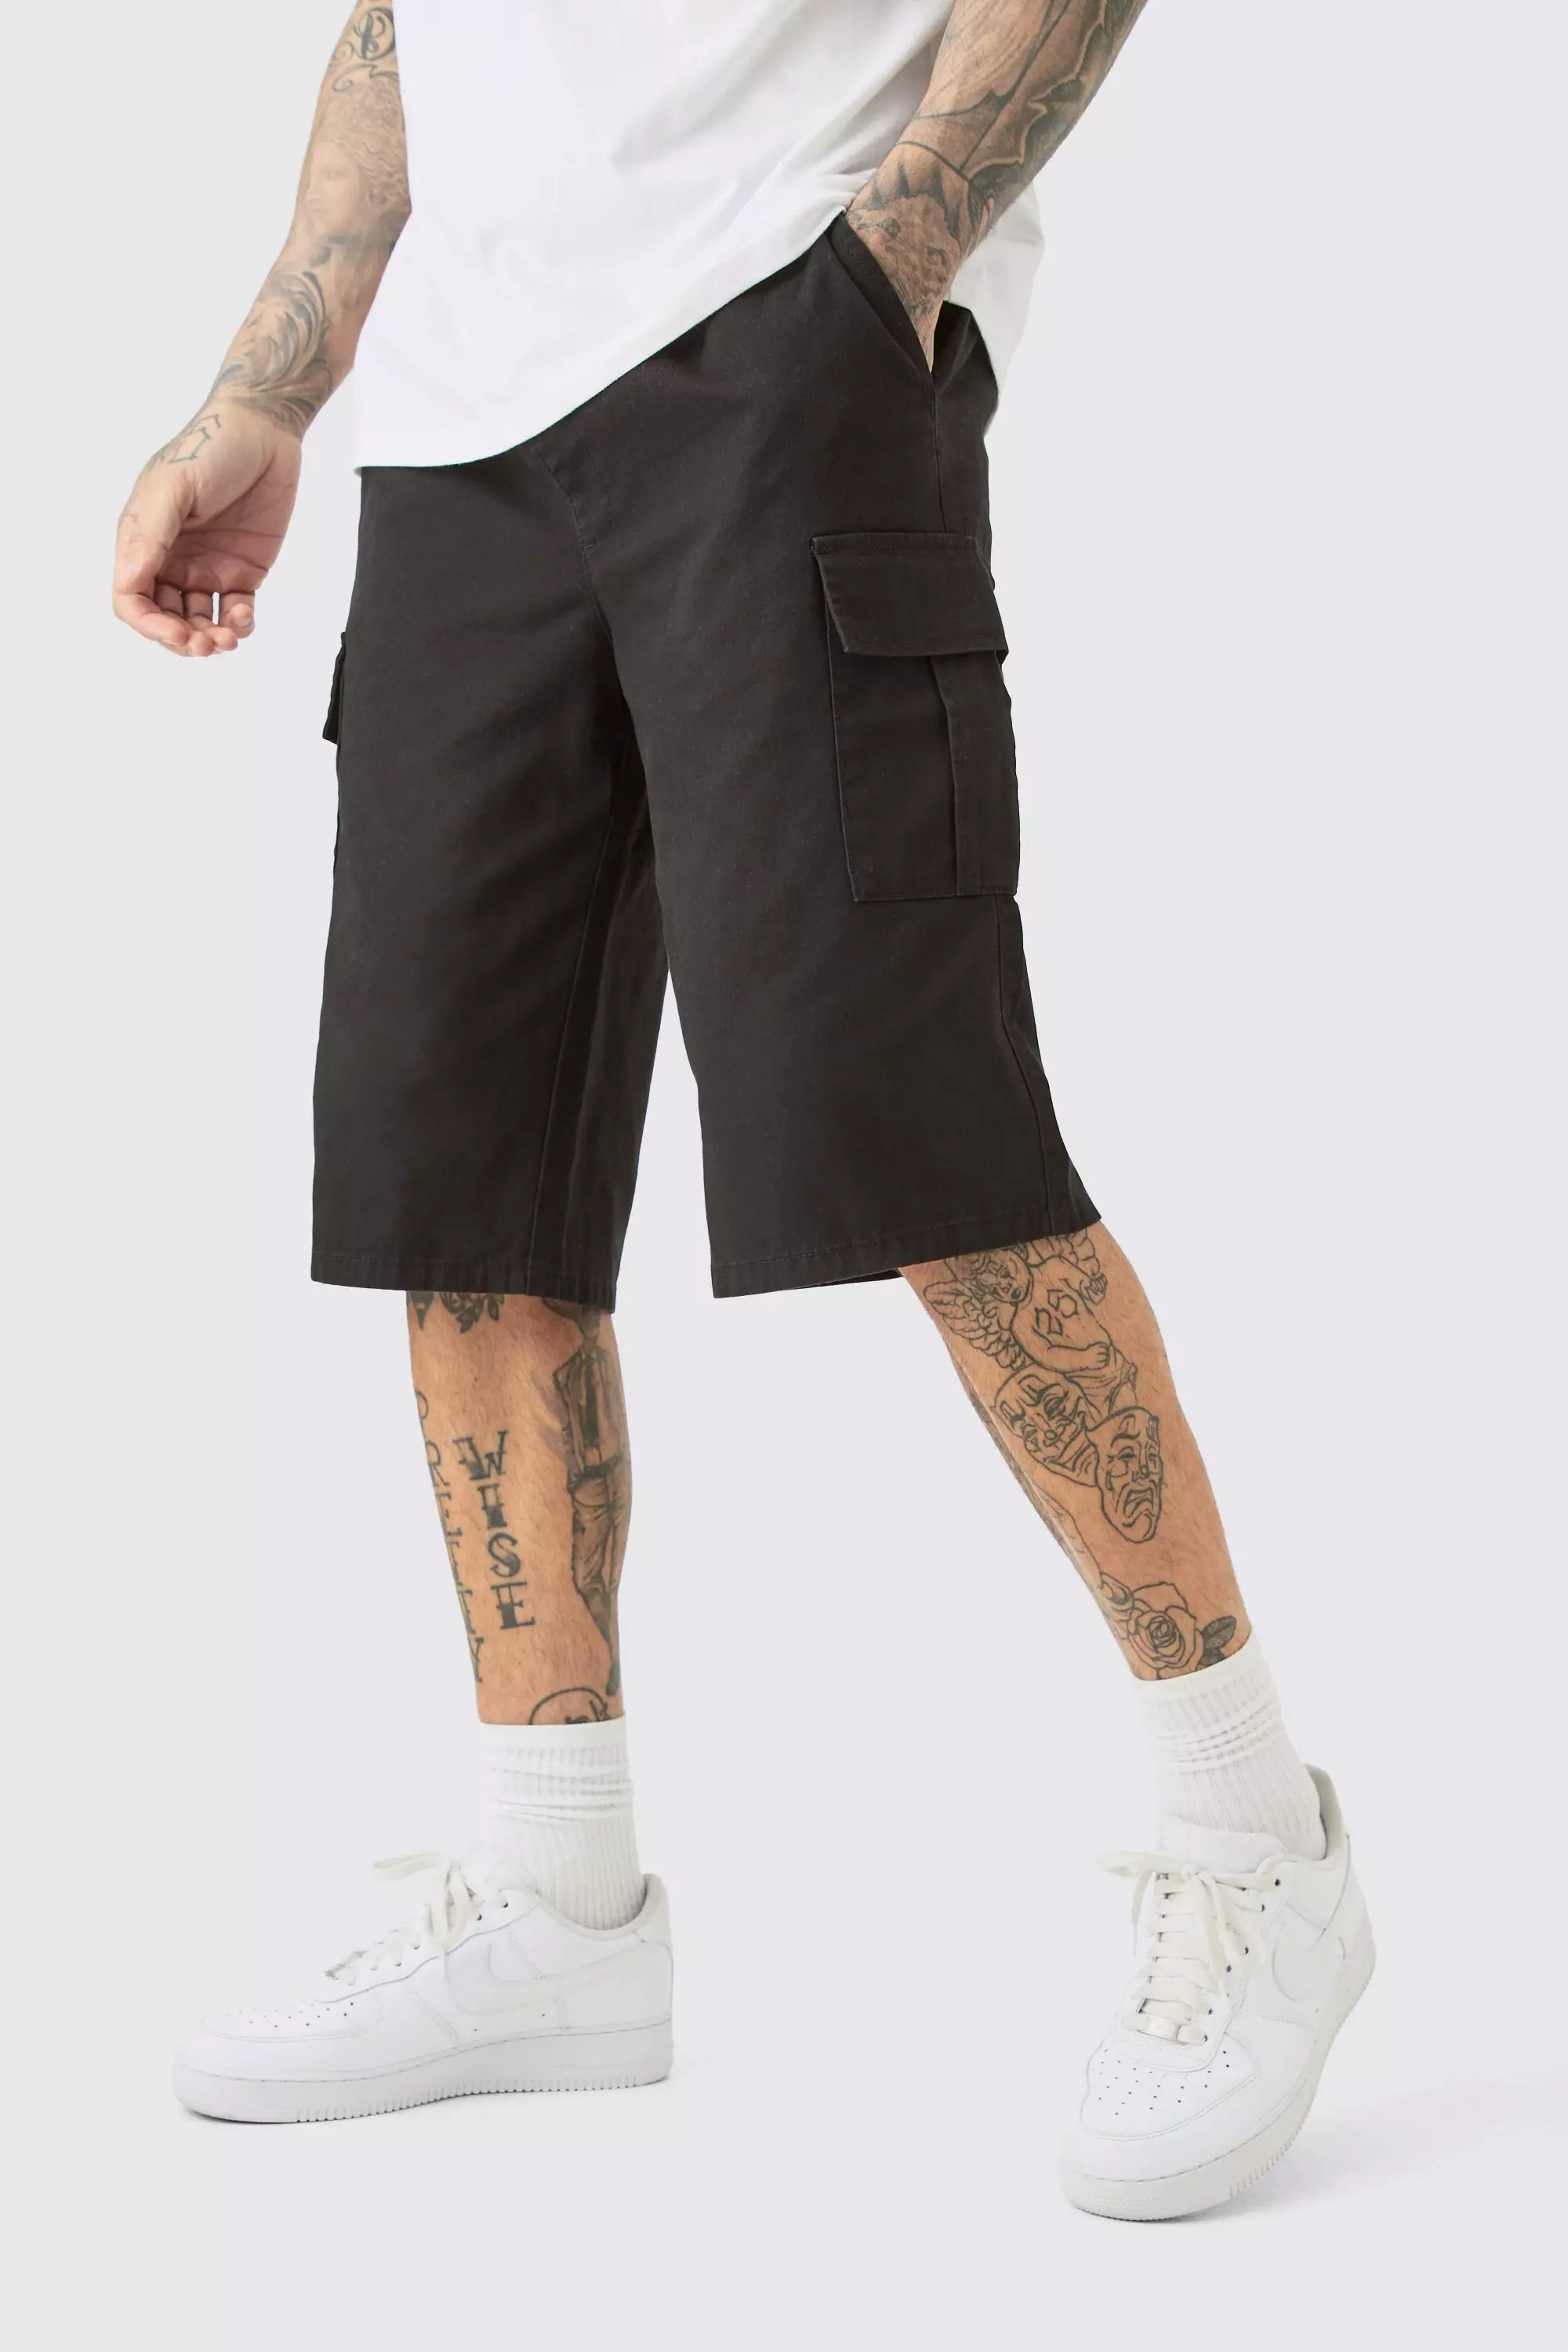 Black Tall Elastic Waist Black Relaxed Fit Longer Length Cargo Shorts